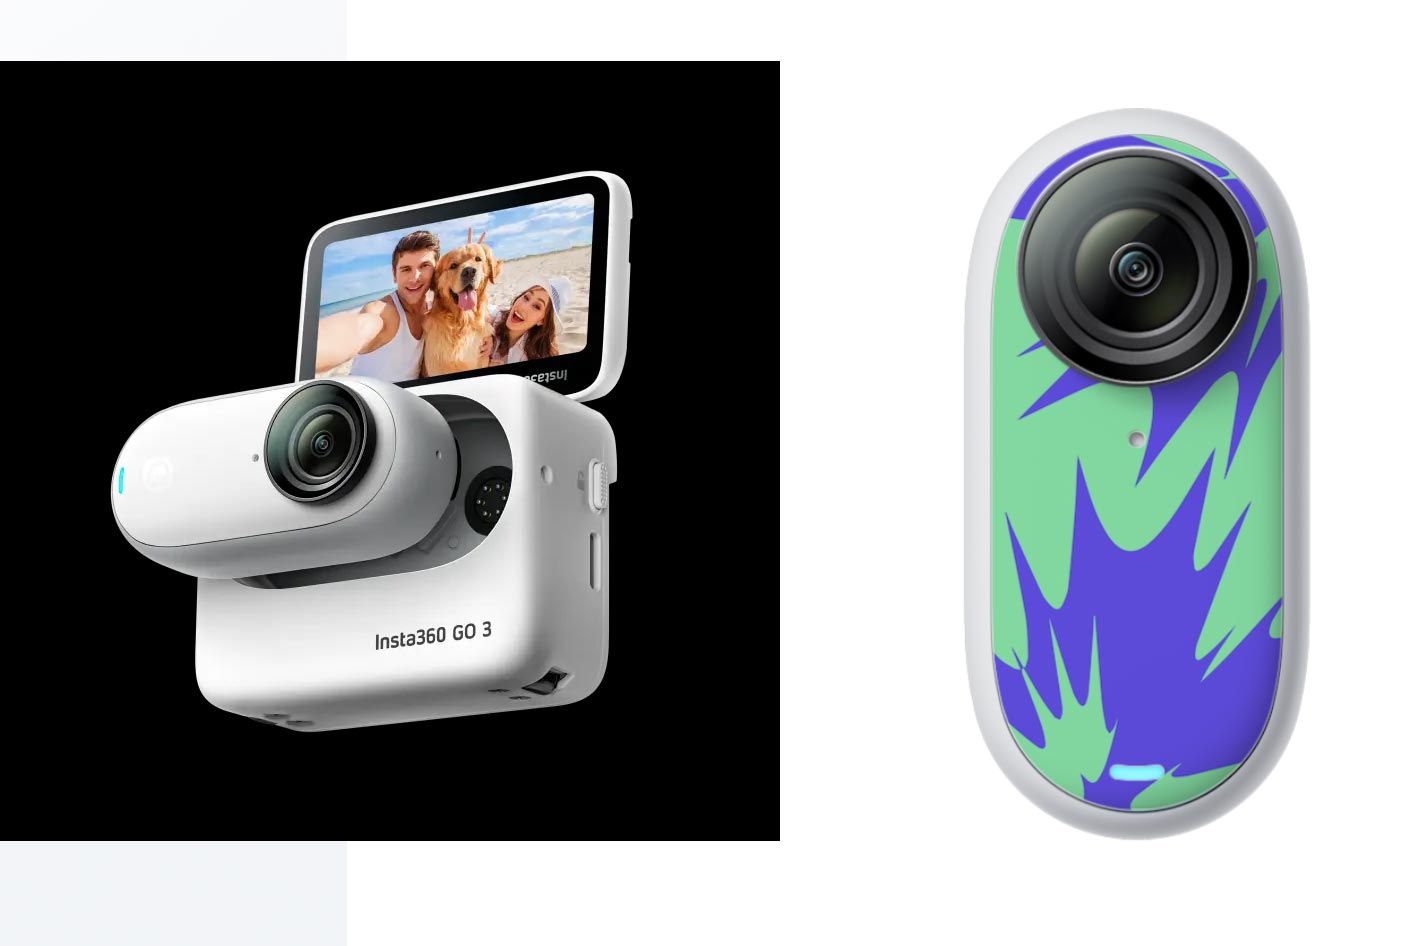 Insta360 Go 3: The Most Versatile Action Camera 